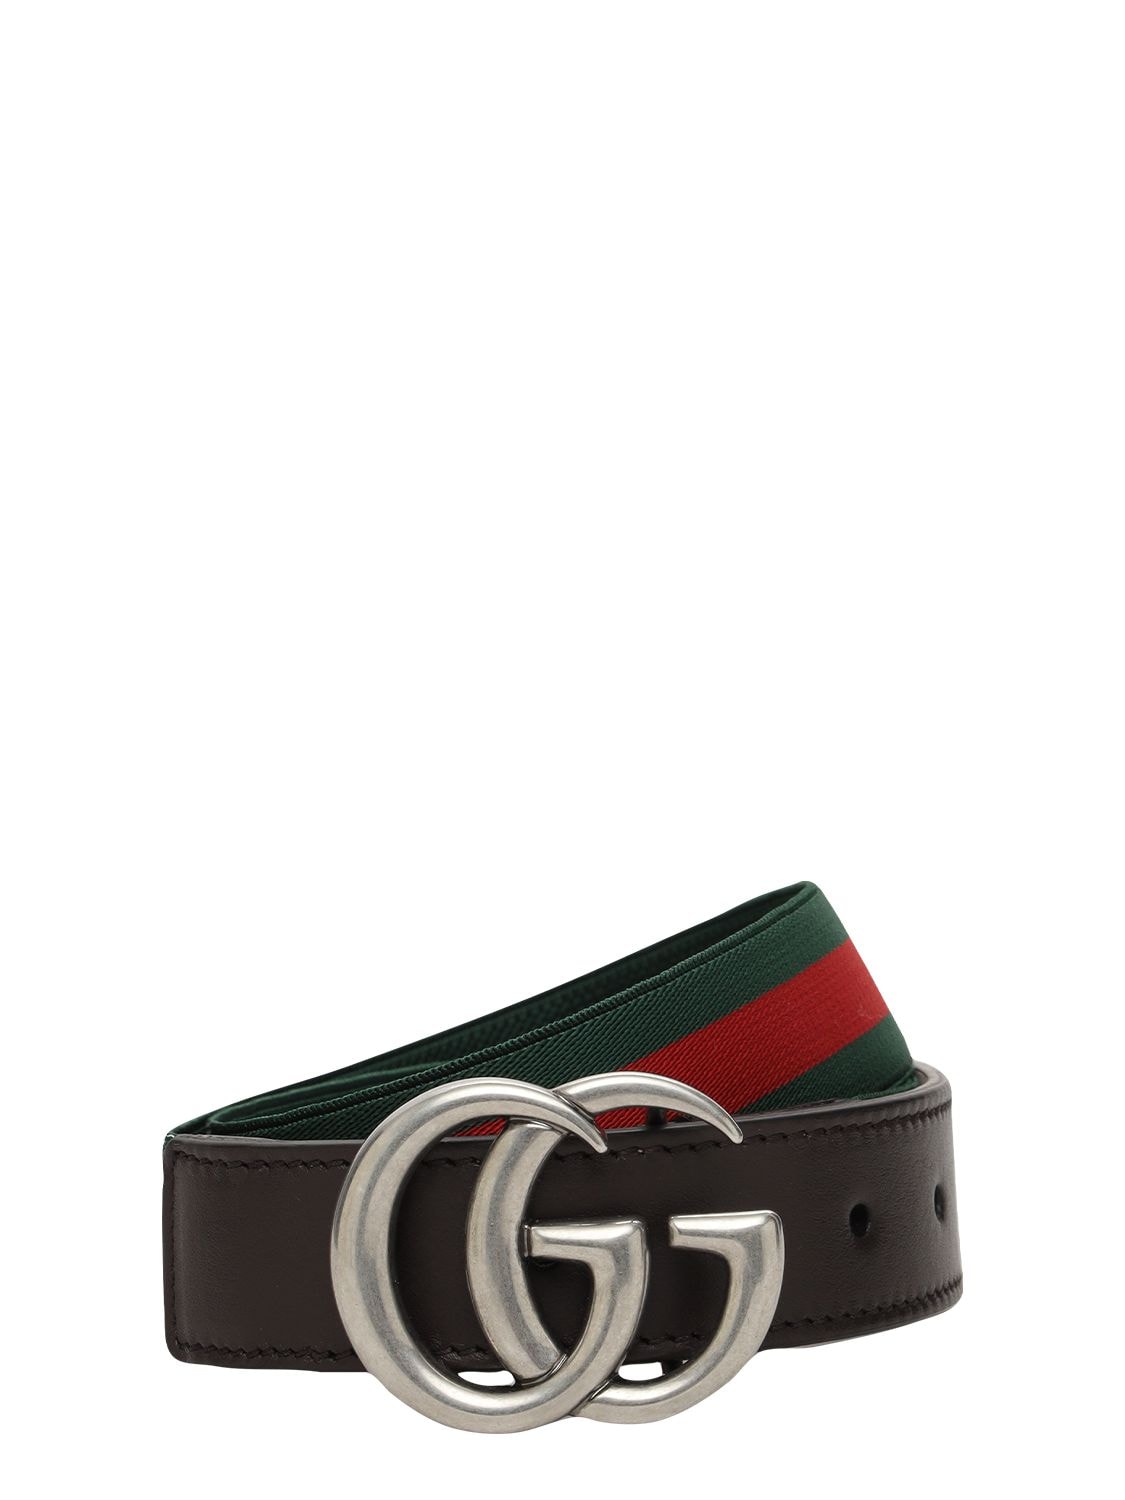 Gucci Babies' Elastic Belt W/ Web Details In Brown